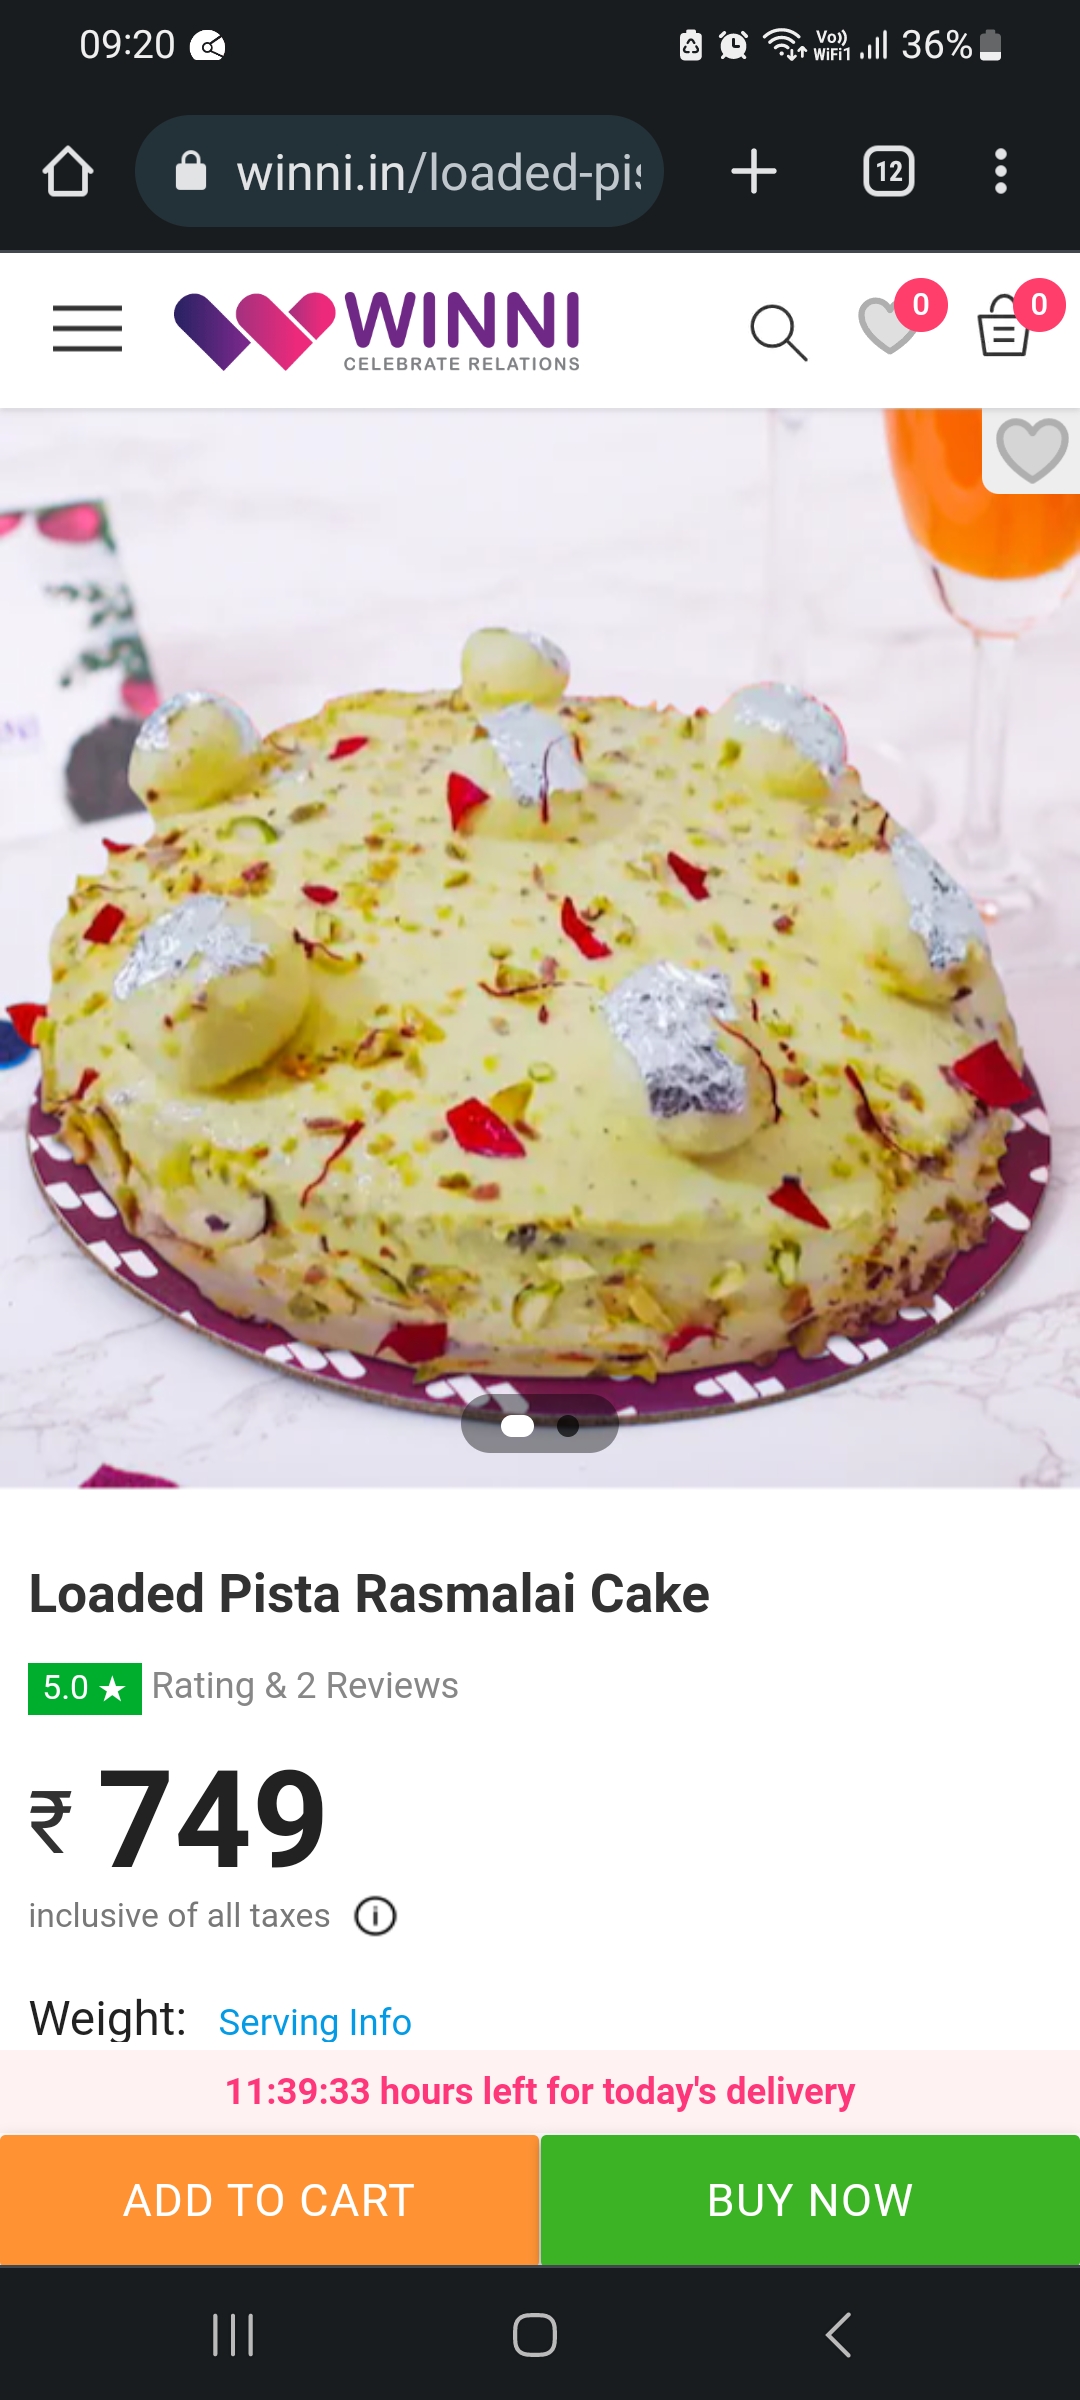 Order Cake Online in Kolkata - Winni Mixed Media by Adarsh Nadda - Pixels